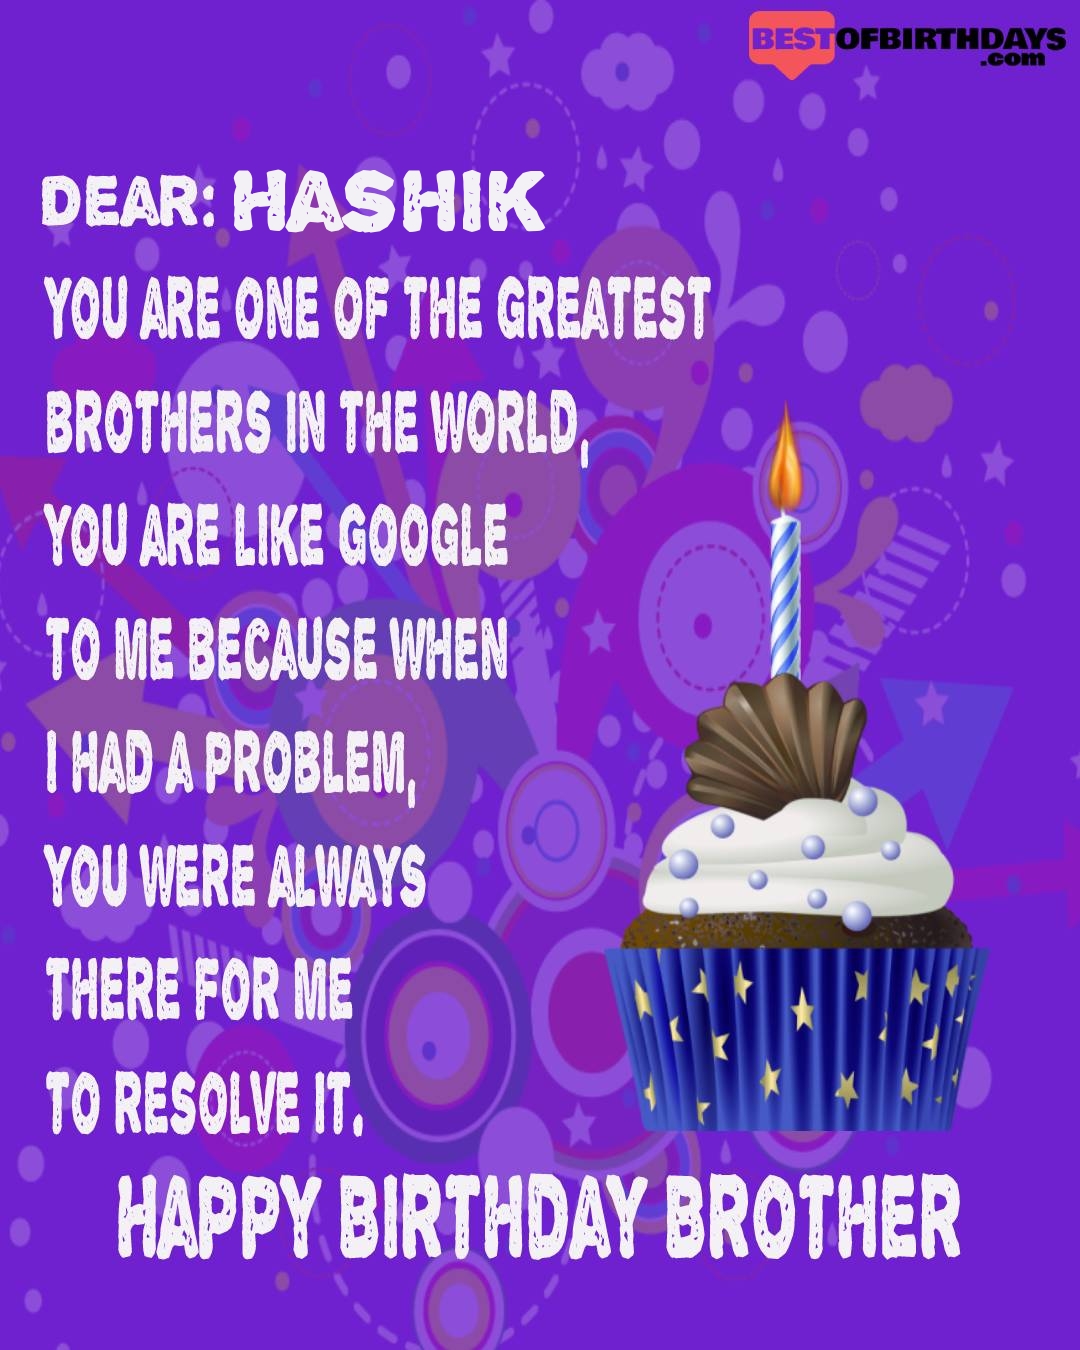 Happy birthday hashik bhai brother bro